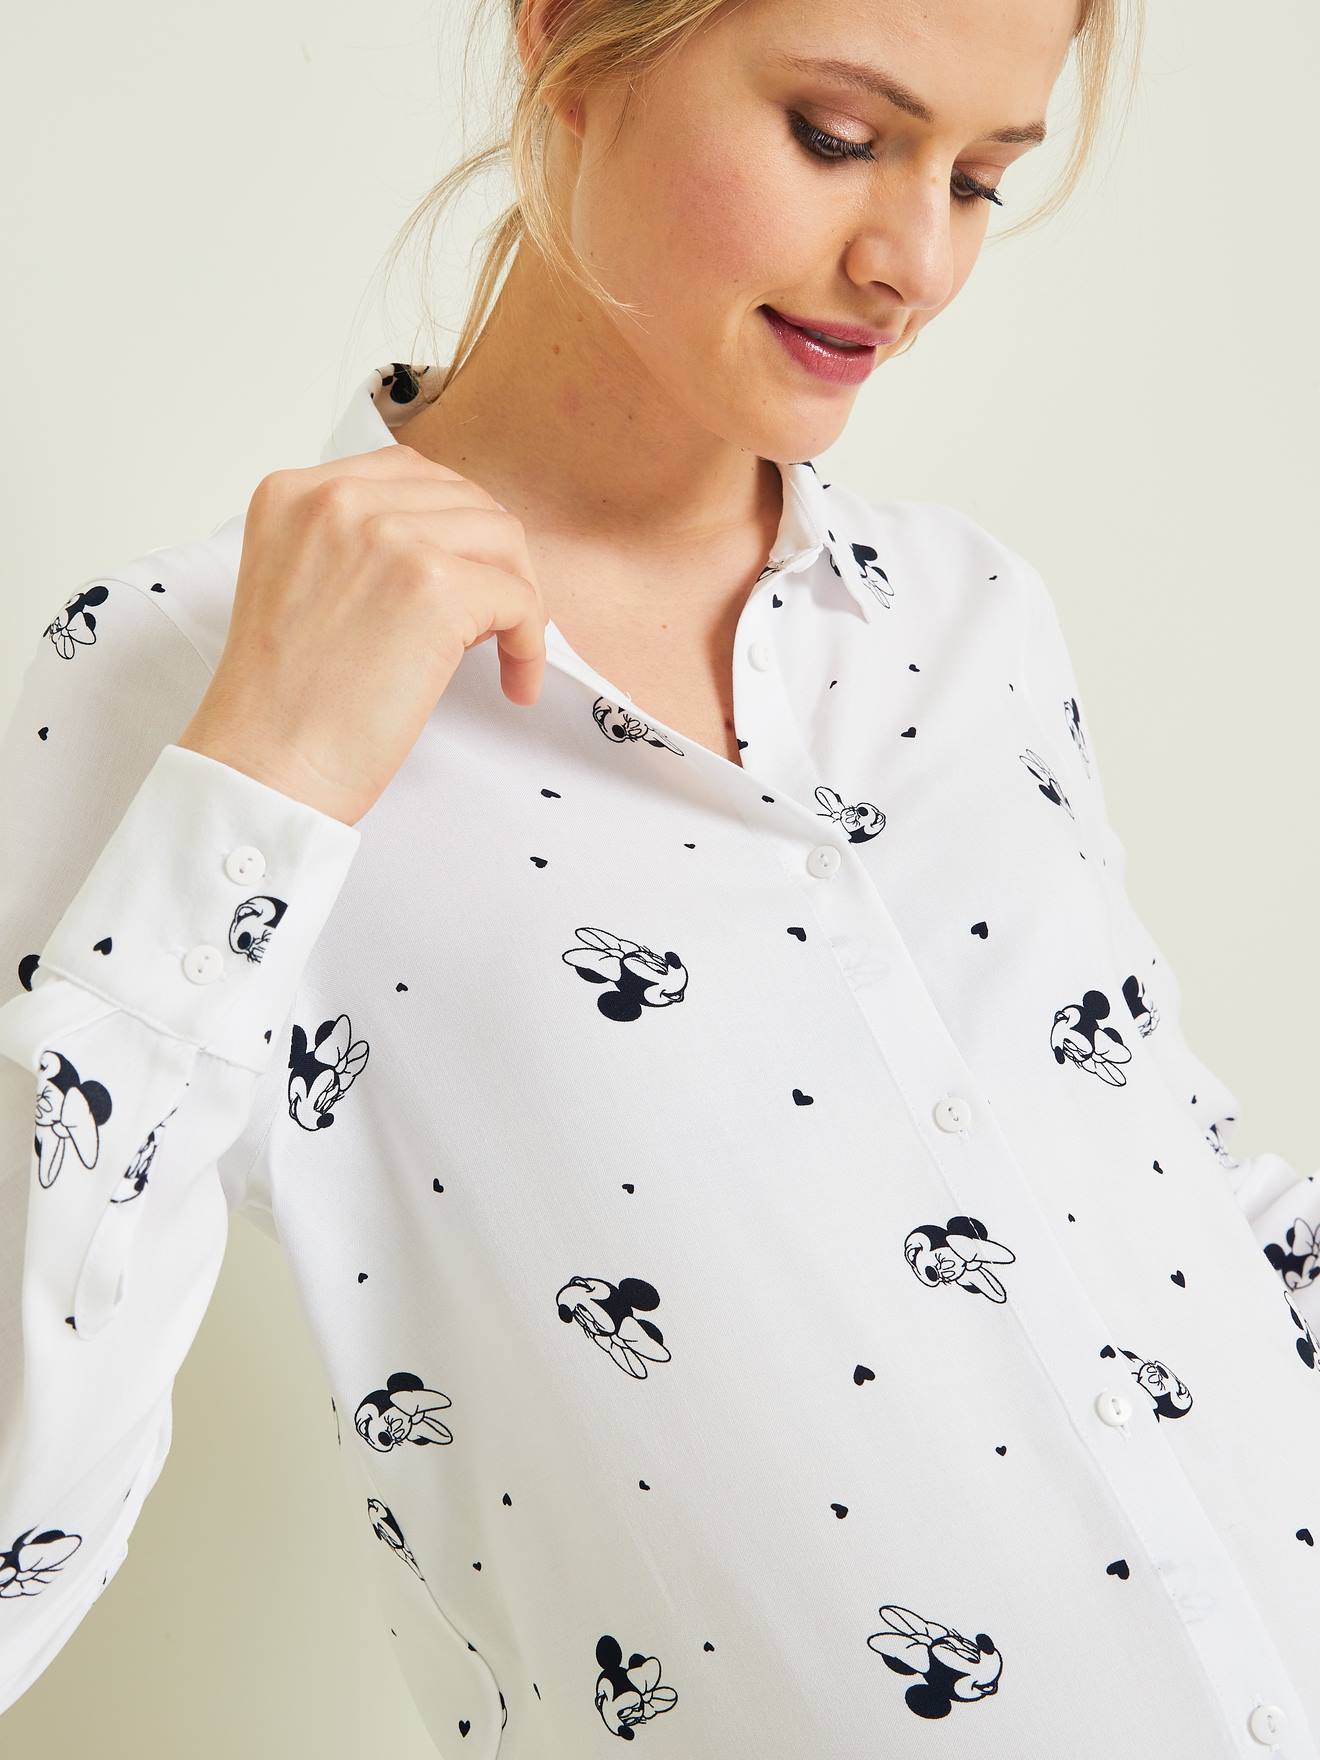 Pyjama femme Disney Minnie® chemise et short blanc - Minnie